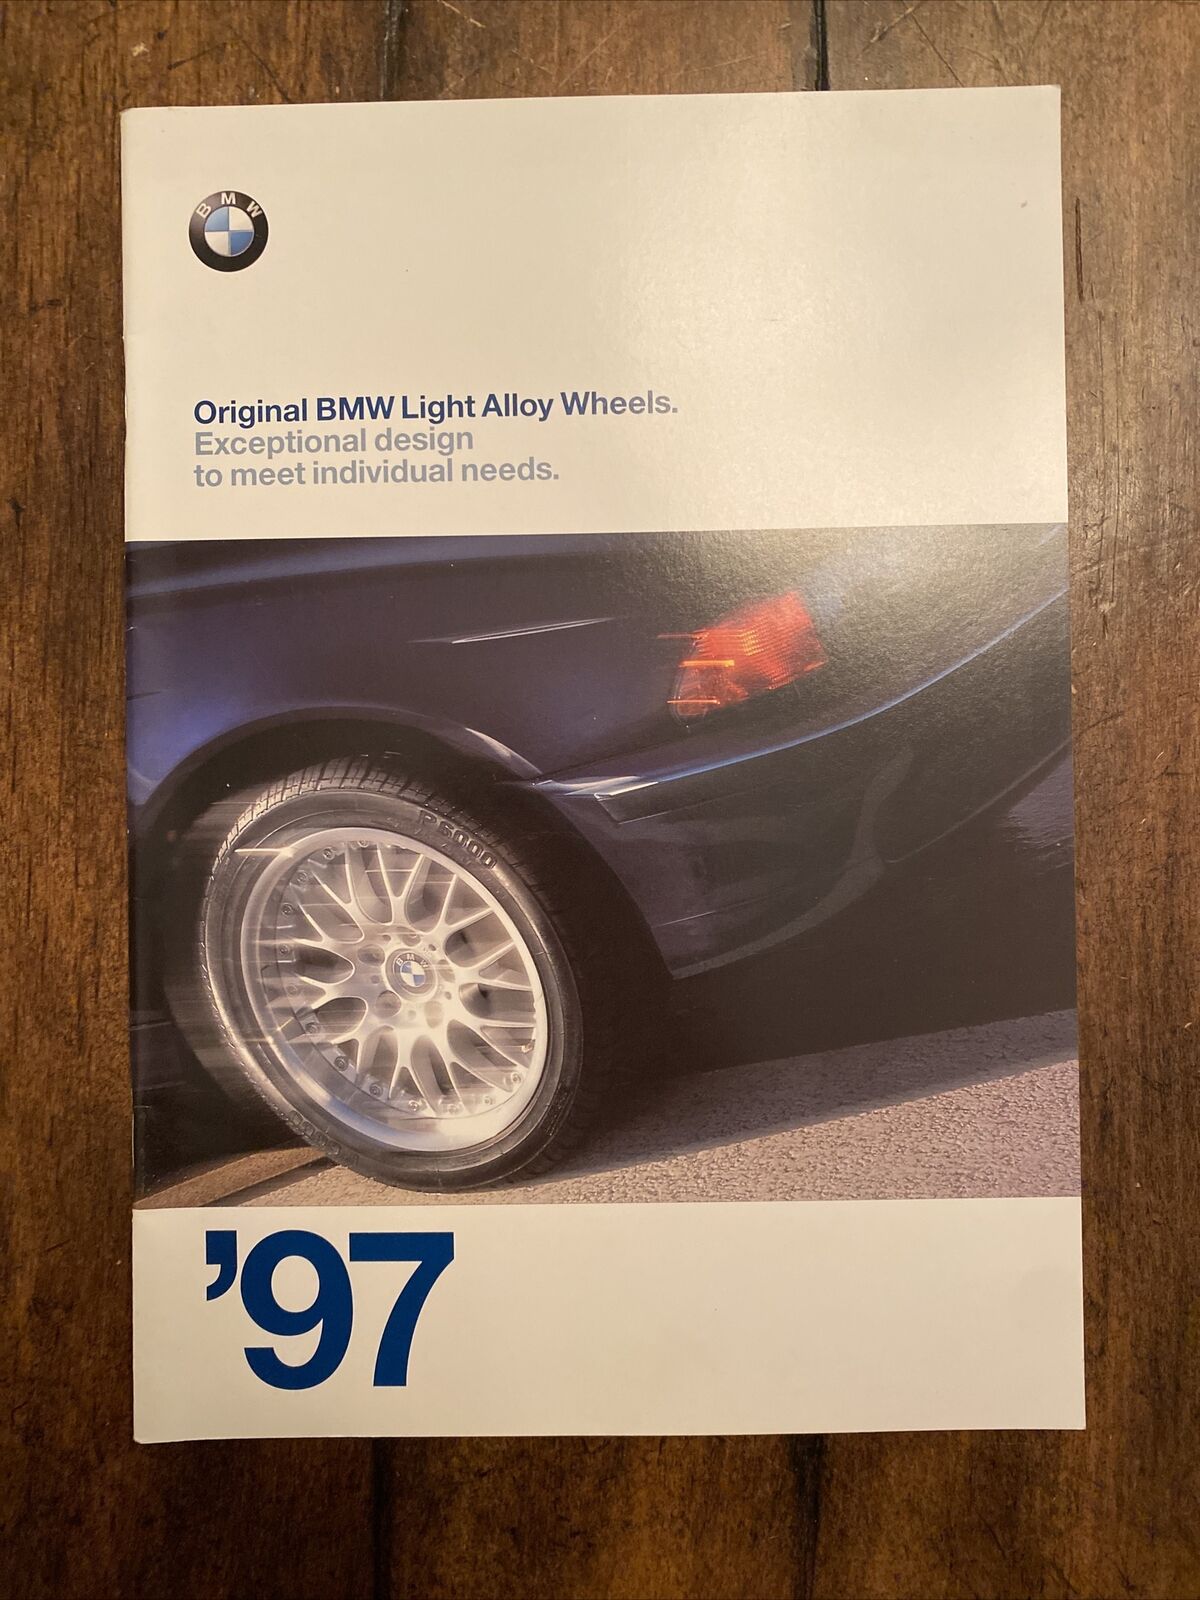 1997 Original BMW Light Alloy Wheels Brochure